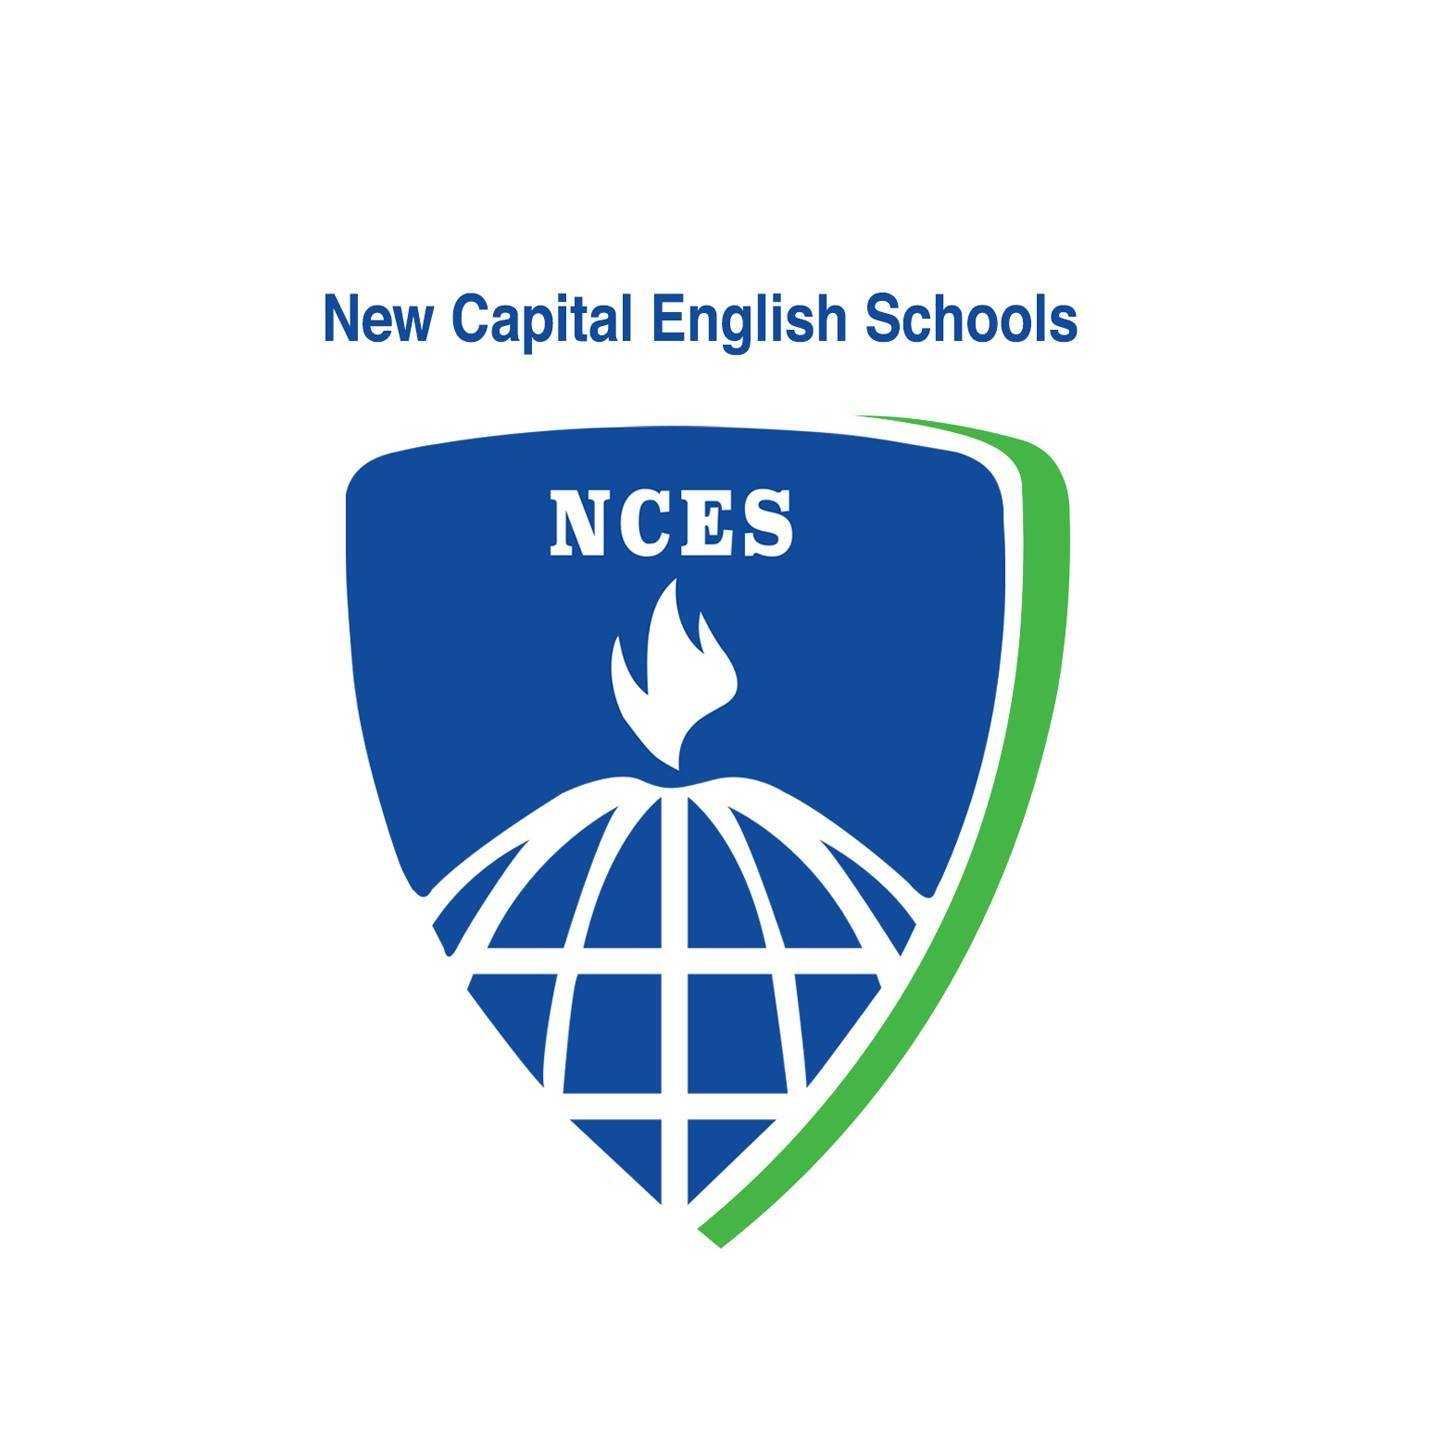 New Capital English Schools - NCES